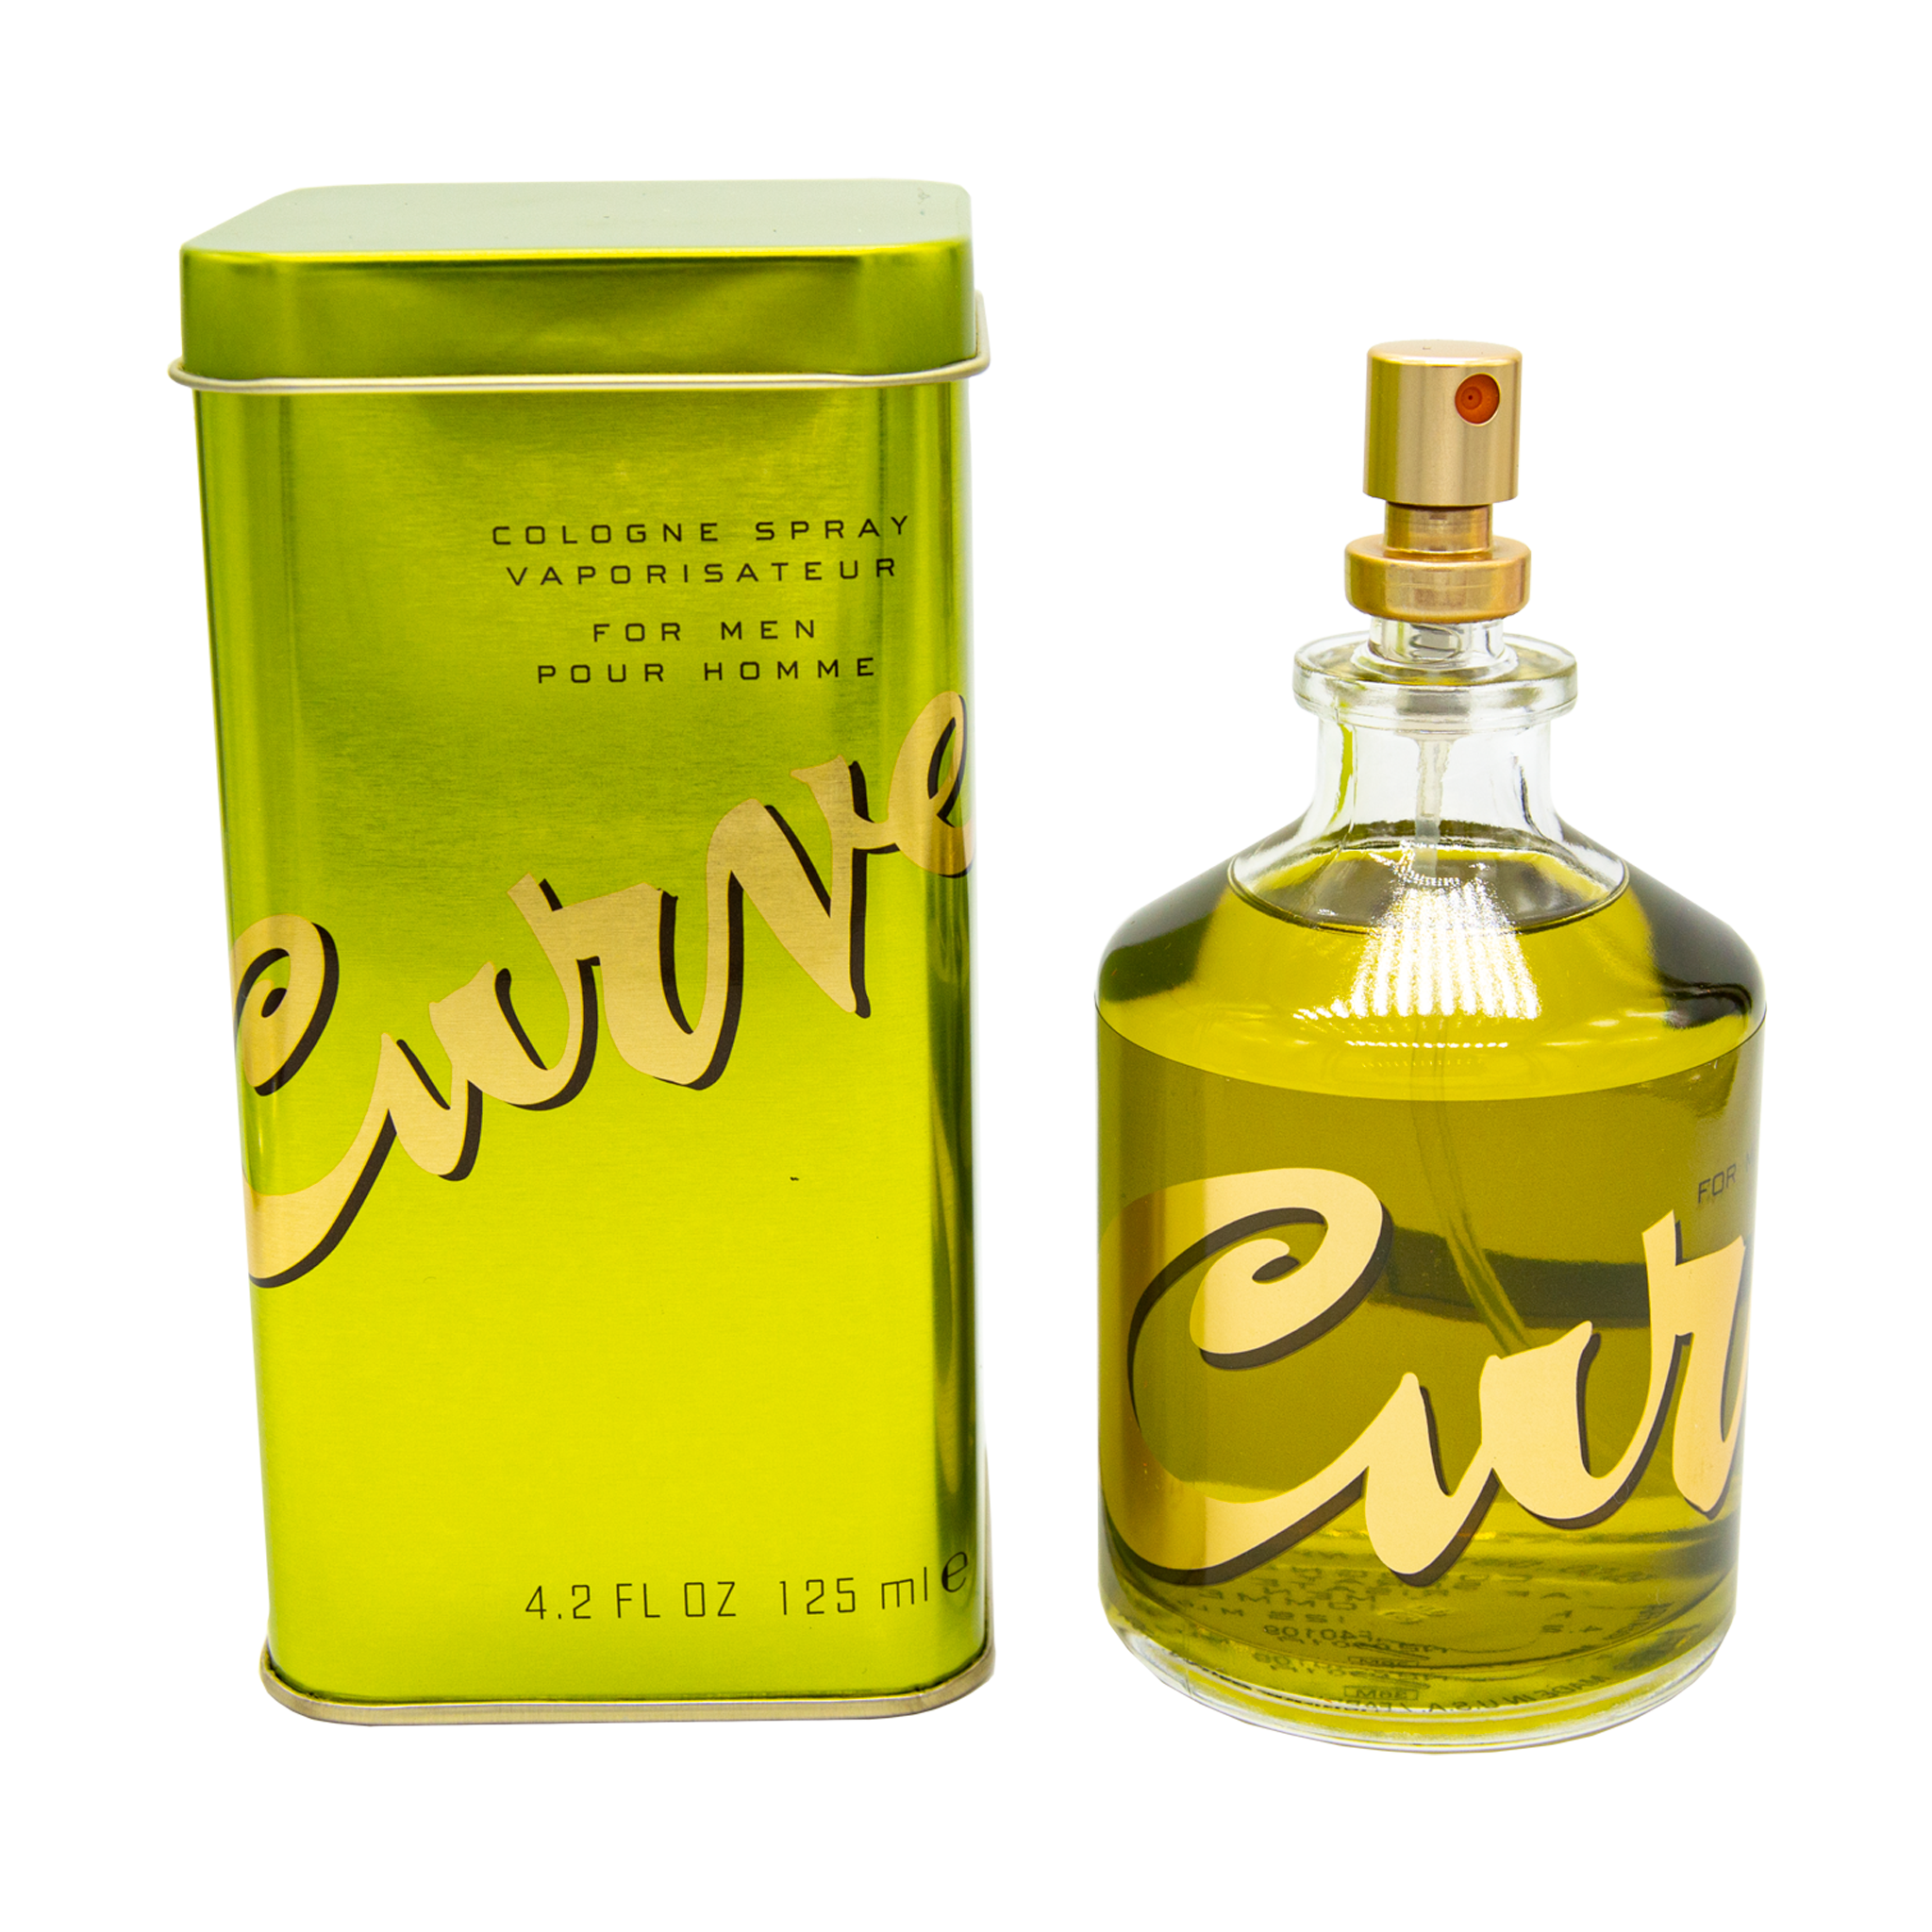 Curve Liz Claiborne perfume - a fragrance for women 1996